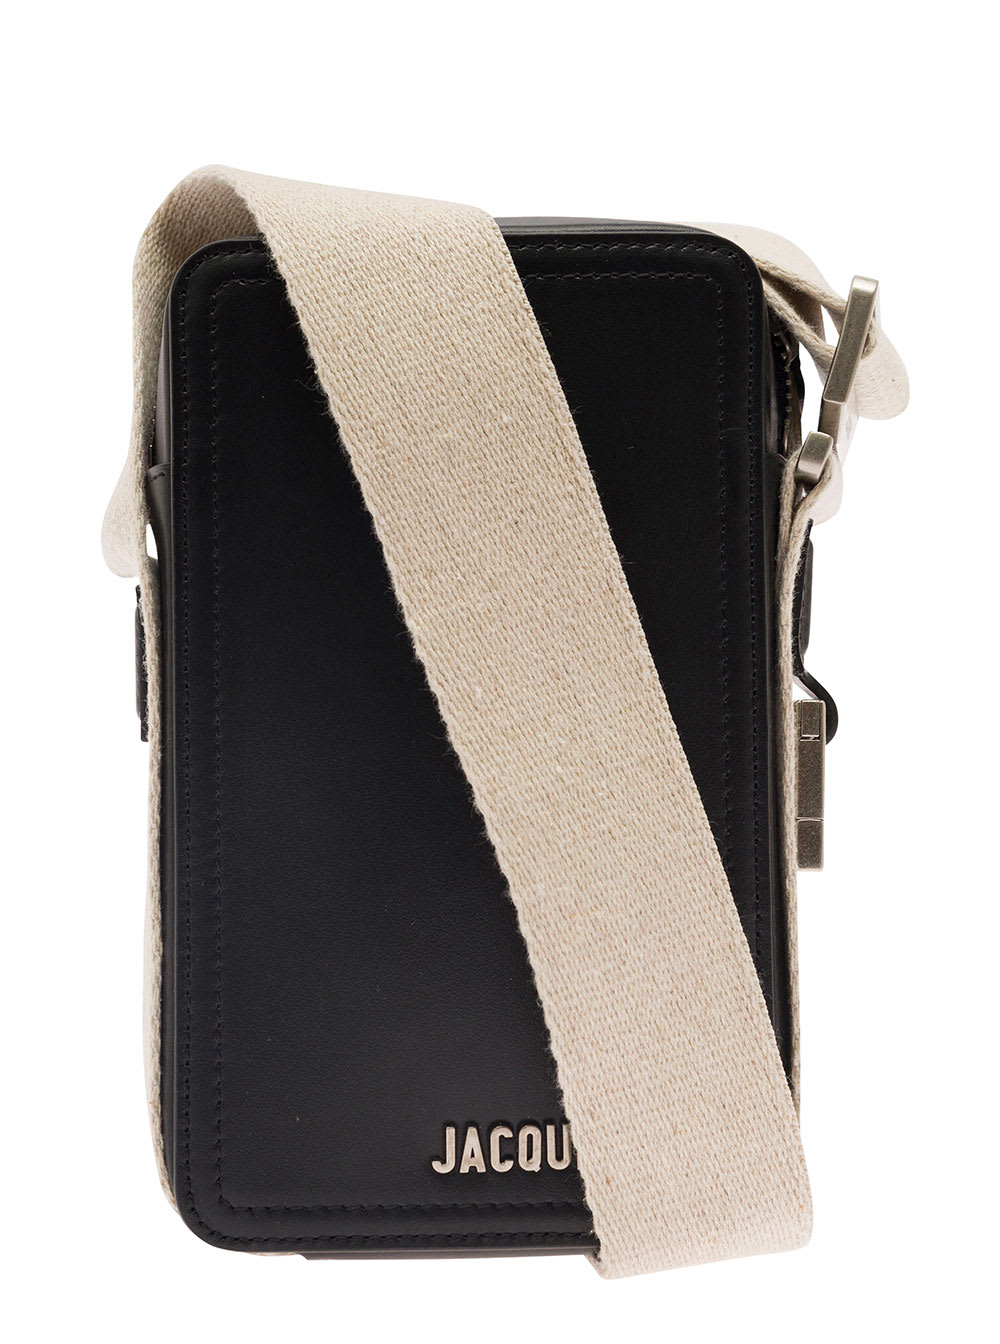 Jacquemus La Cuerda Vertical Shoulder Bag